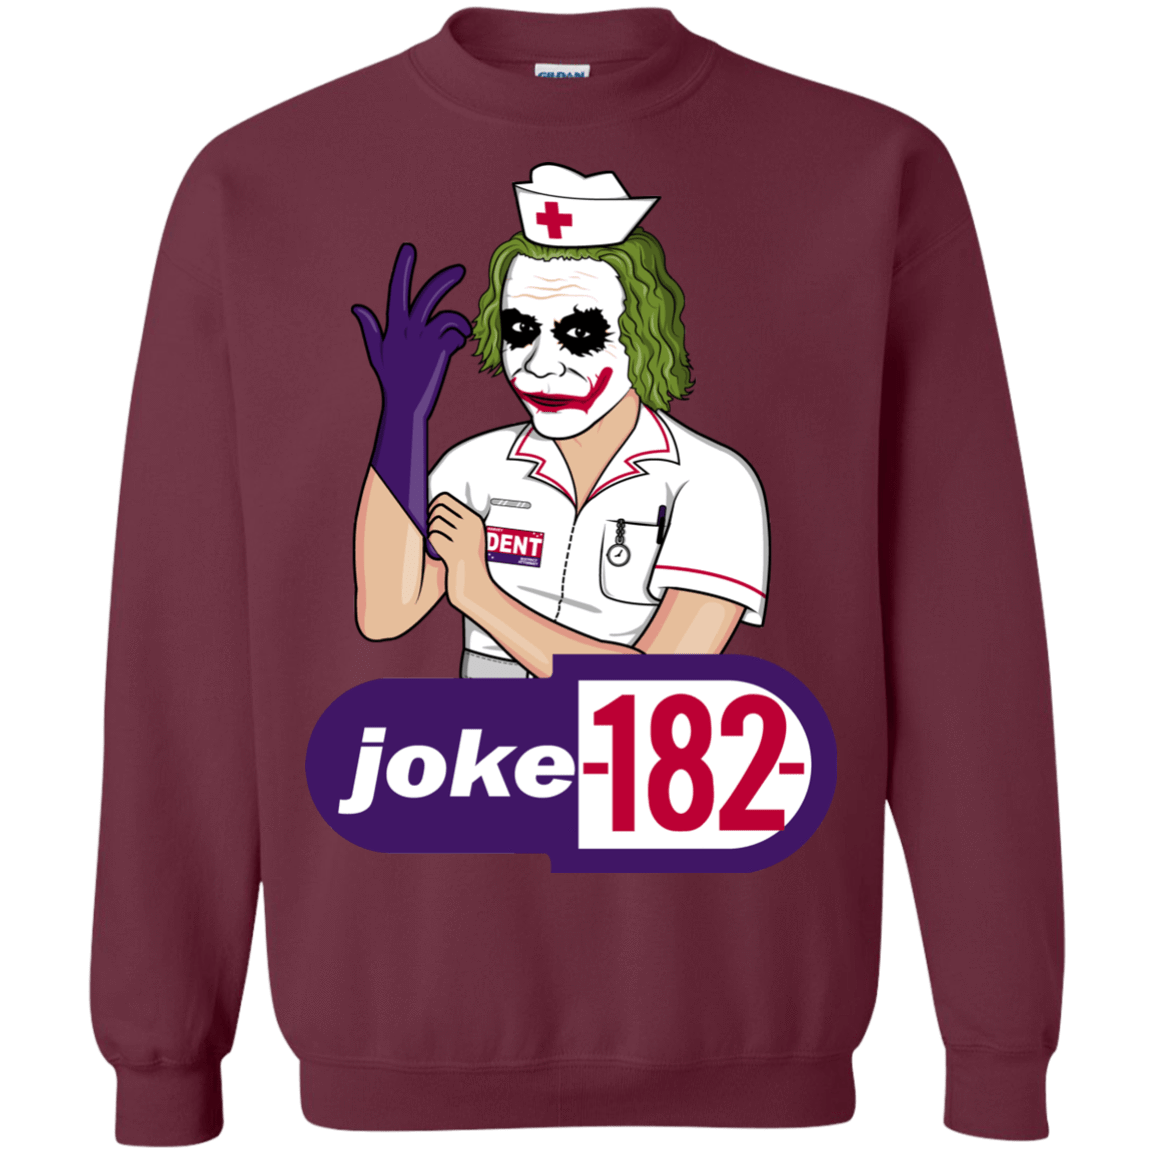 Sweatshirts Maroon / Small Joke182 Crewneck Sweatshirt